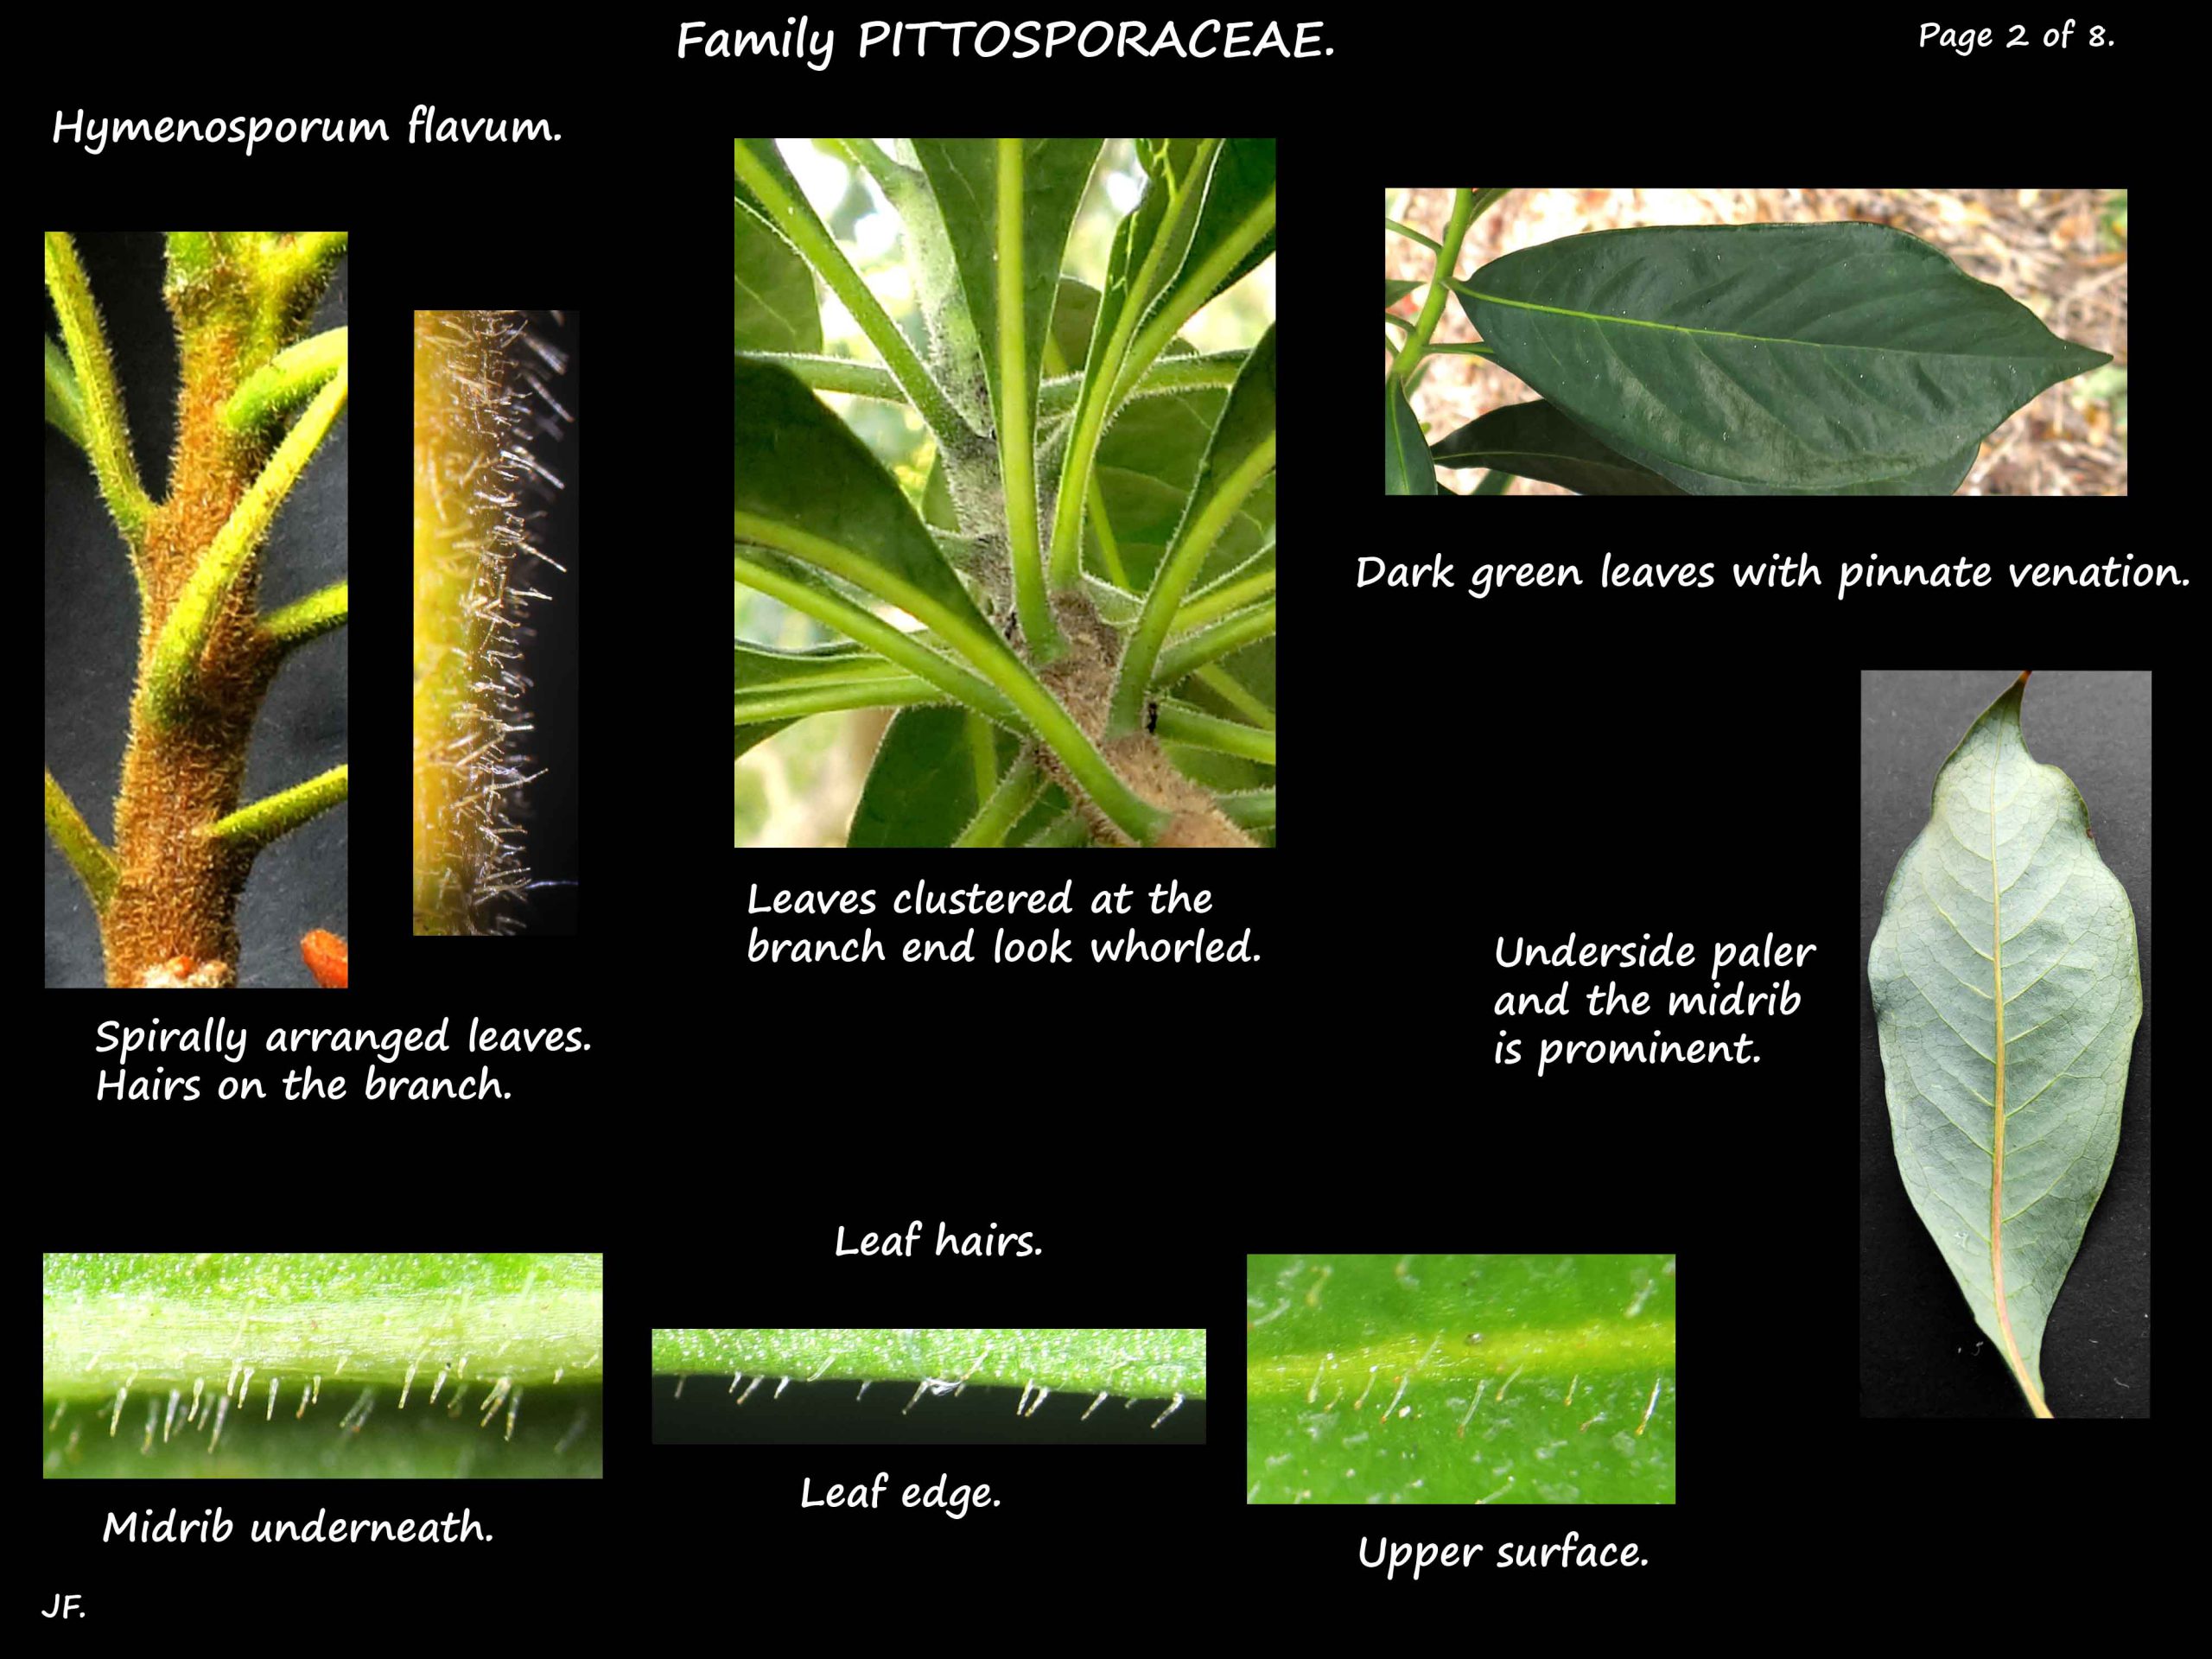 2 Hymenosporum flavum leaves